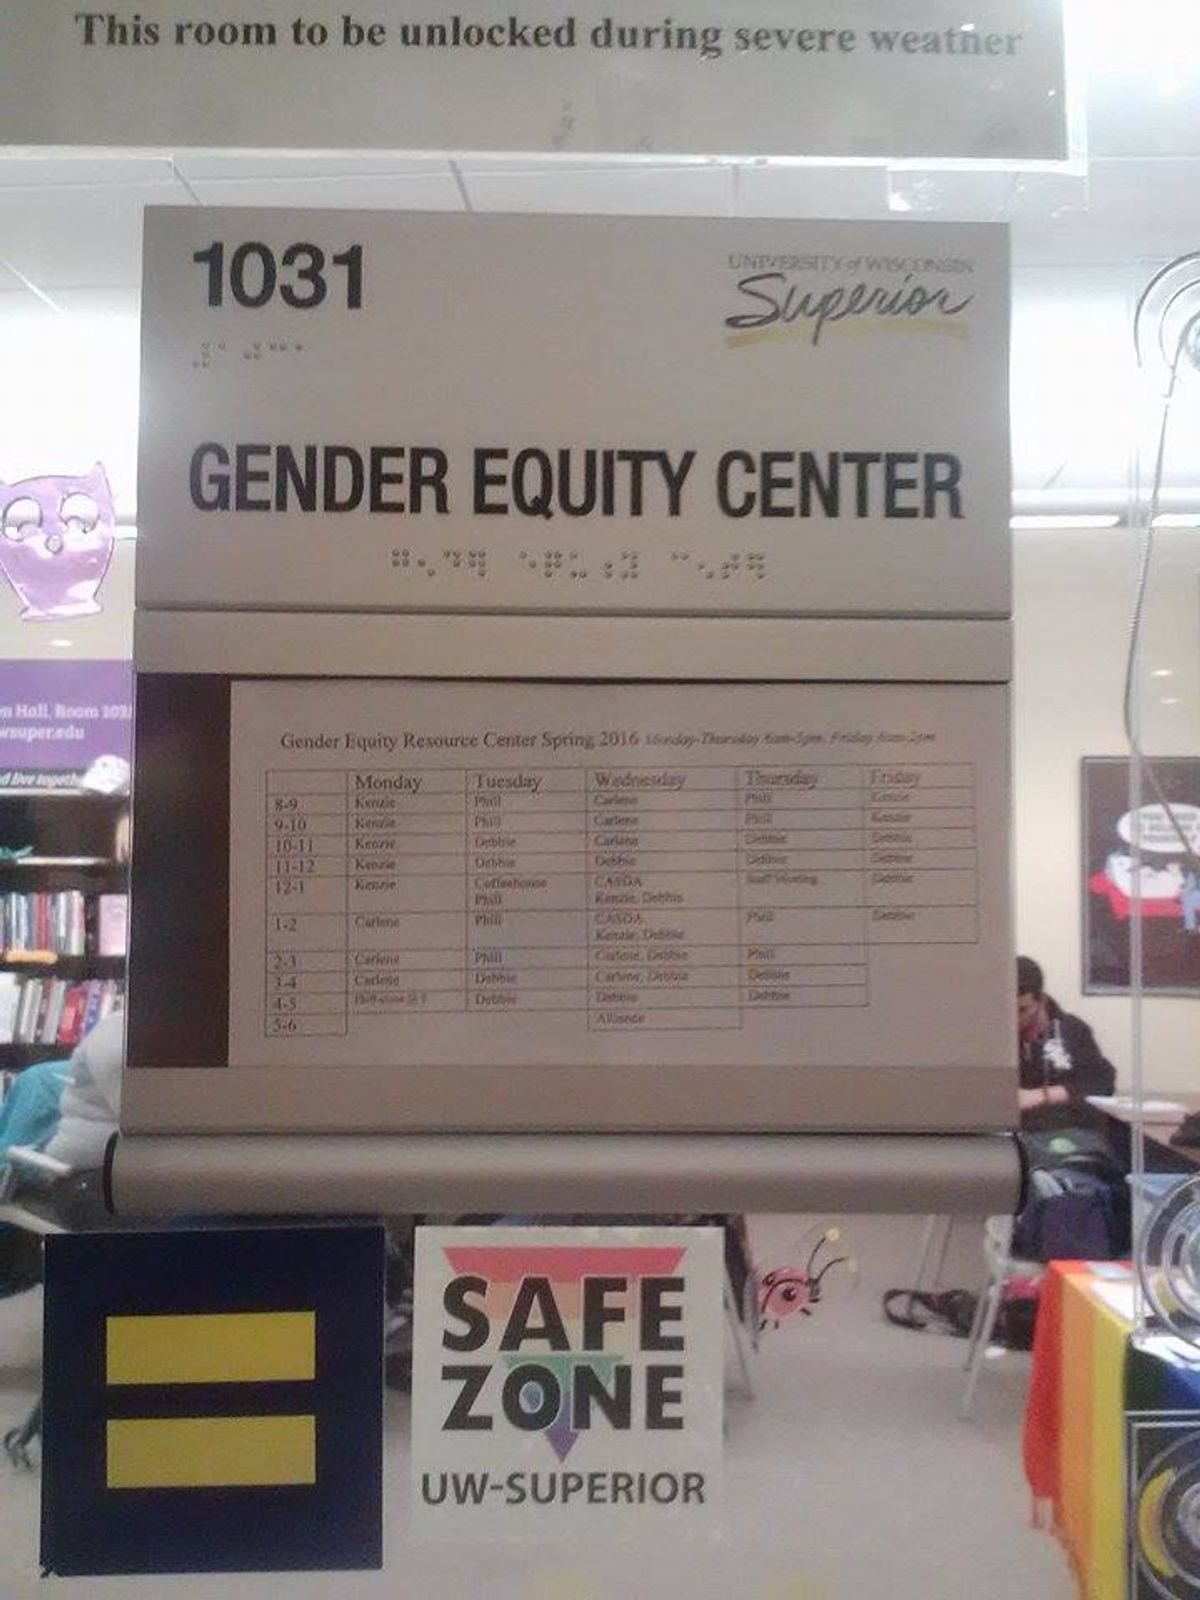 The UWS Gender Equity Resource Center